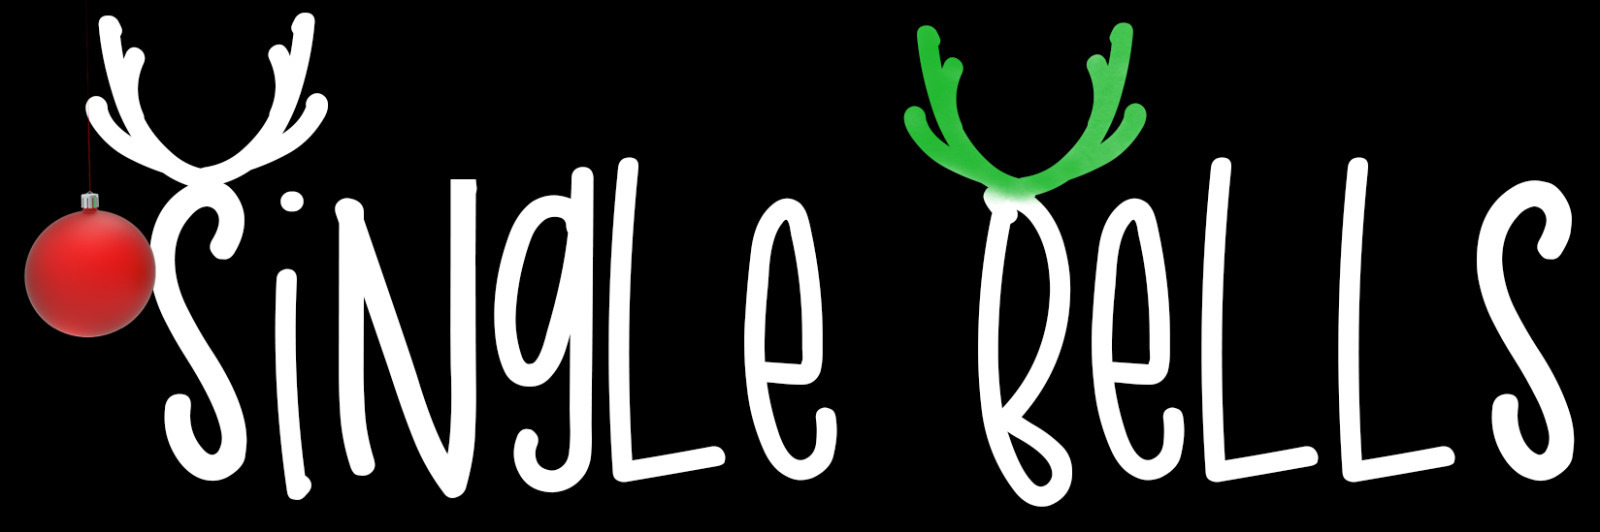 single bells logo